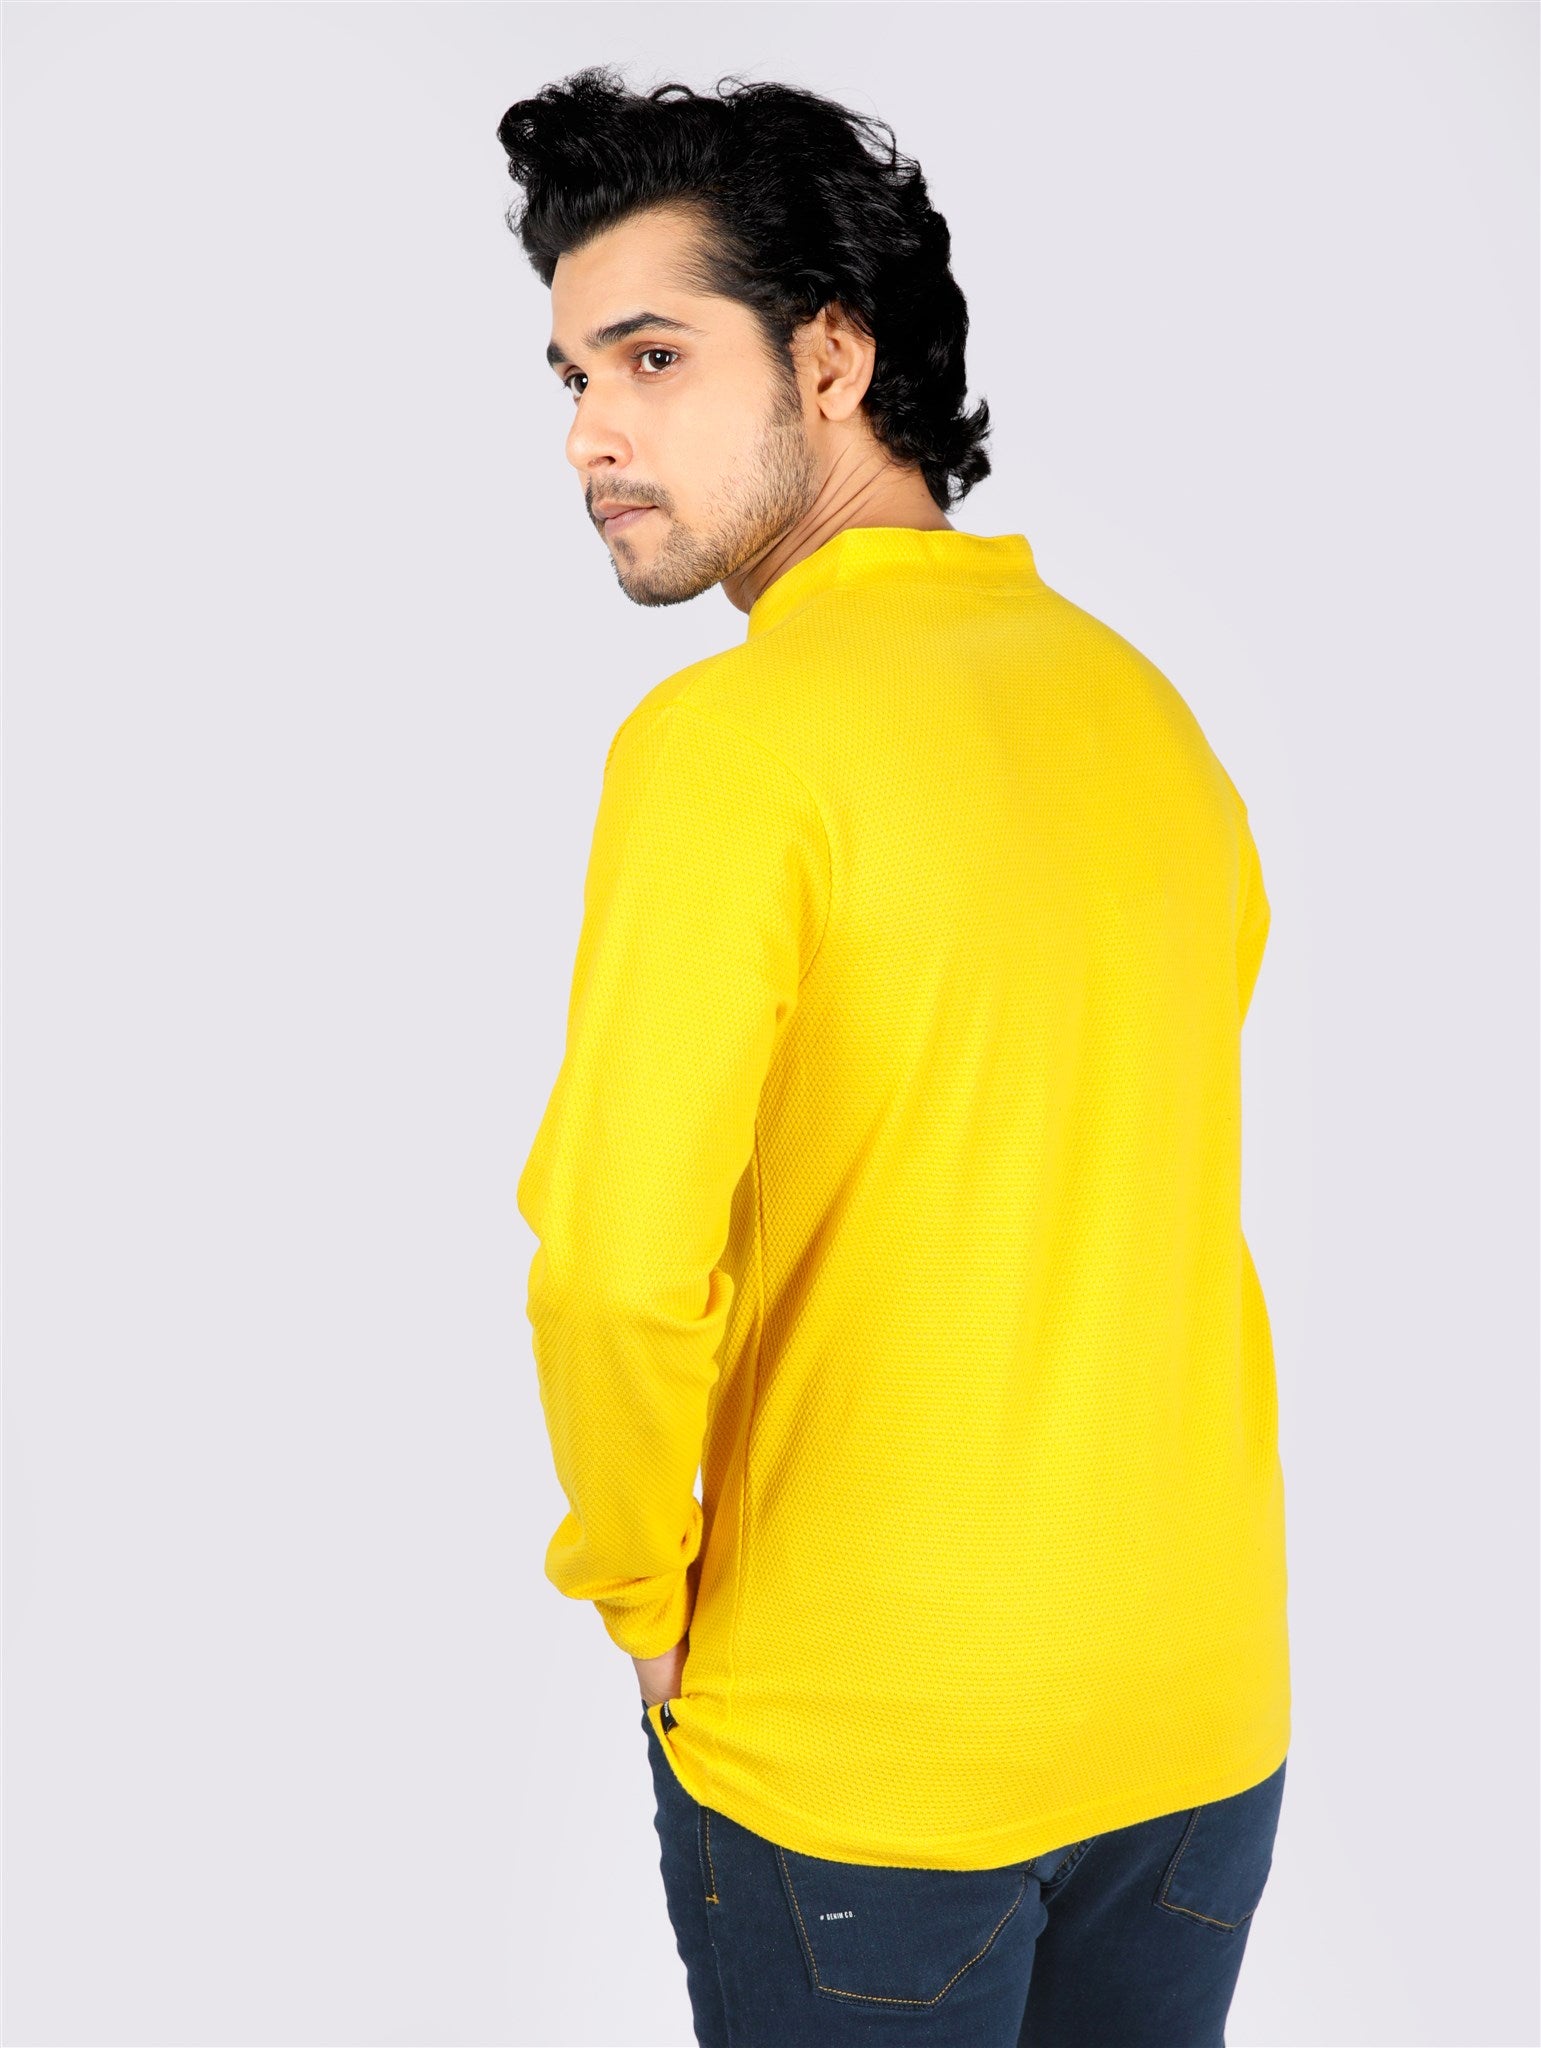 Fostino Popcorn Yellow Full Sleeves T-Shirt - Fostino - T-Shirts